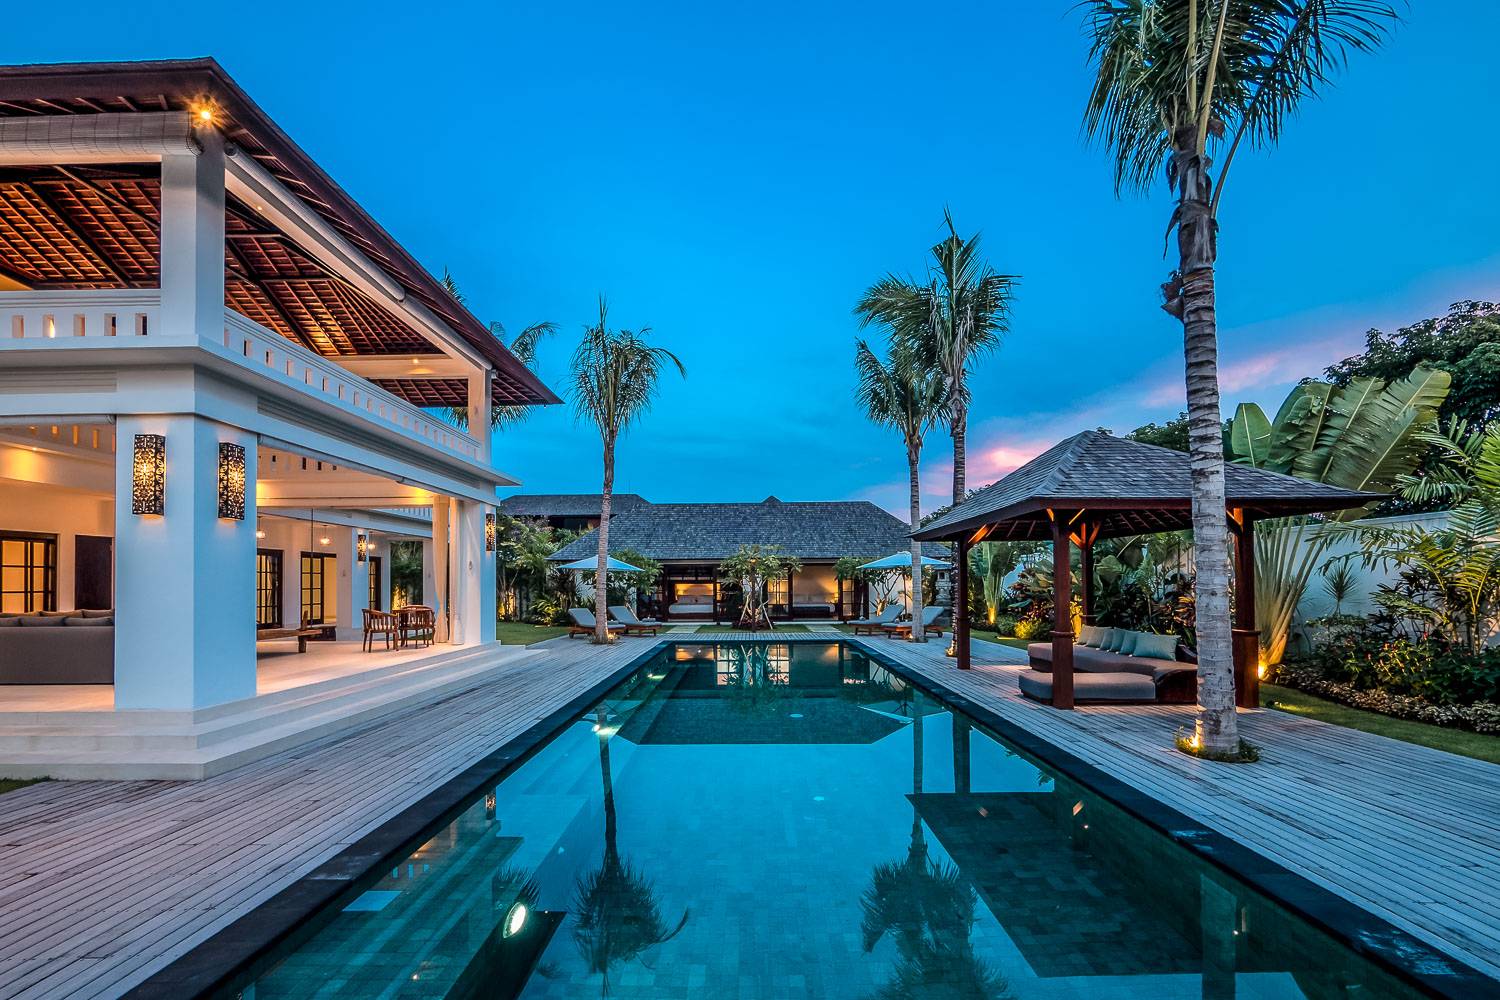 6 Bedroom Luxury Seminyak Villa with Pool at Bali - VillaGetaways